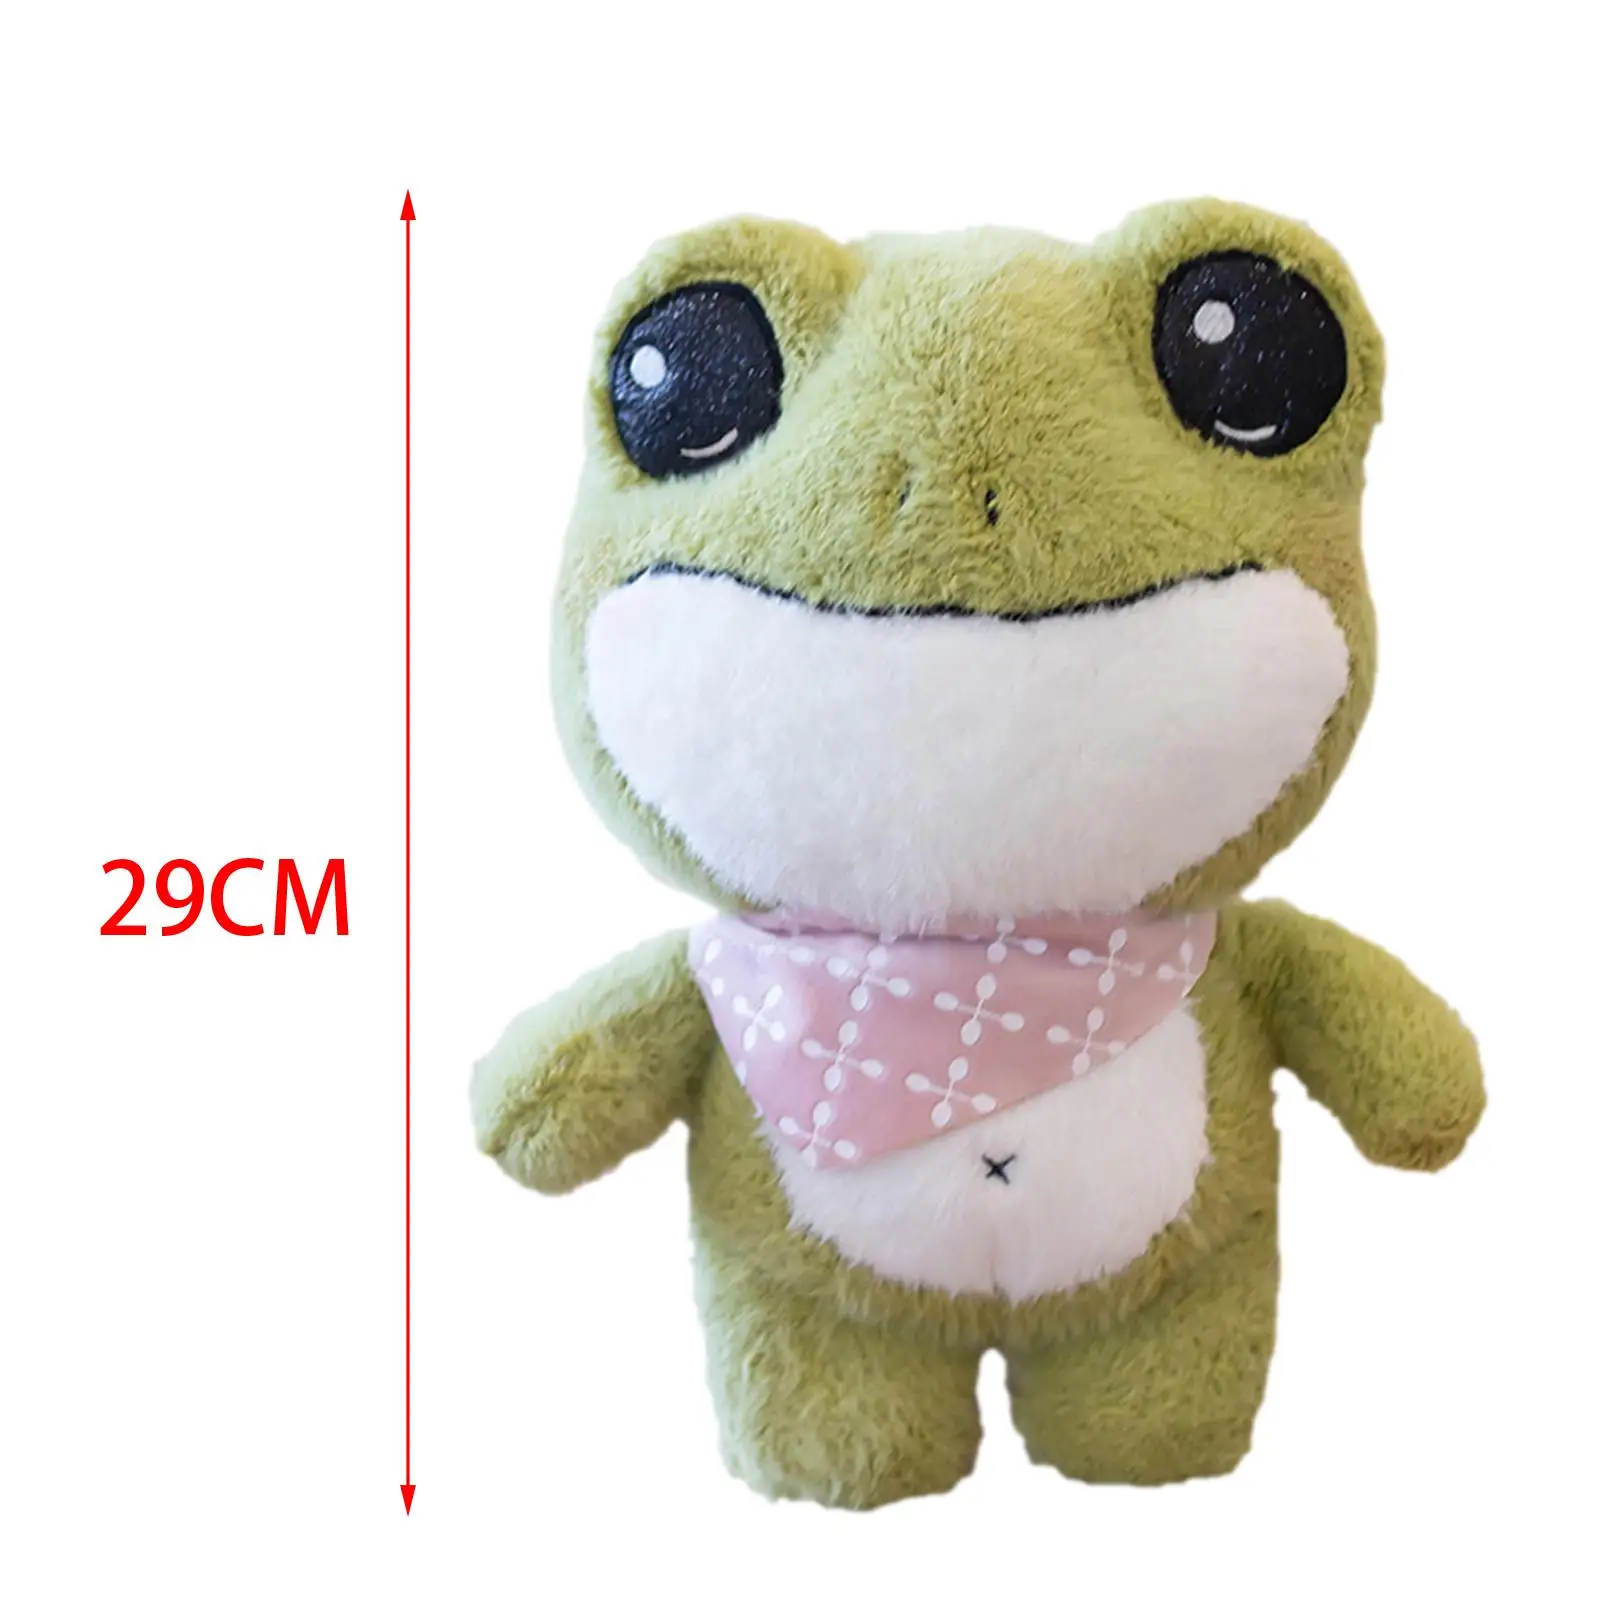 Frog Stuffed Animal 12 inch Stuffed for Desktop Decor Birthday Gifts style 1